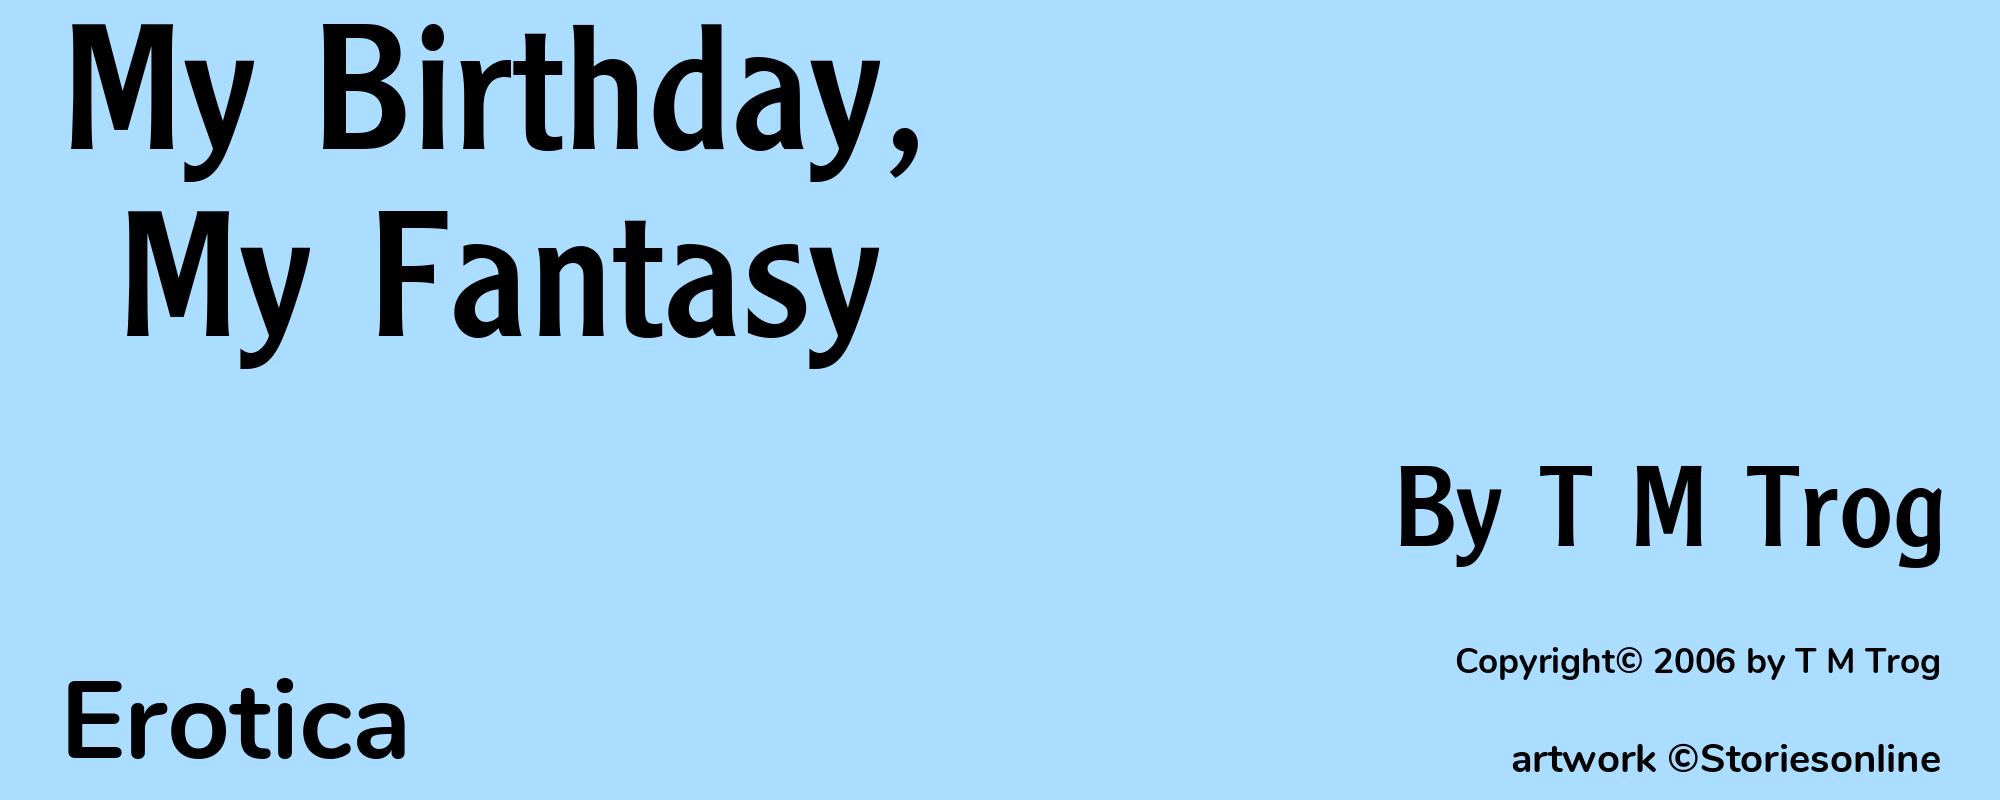 My Birthday, My Fantasy - Cover